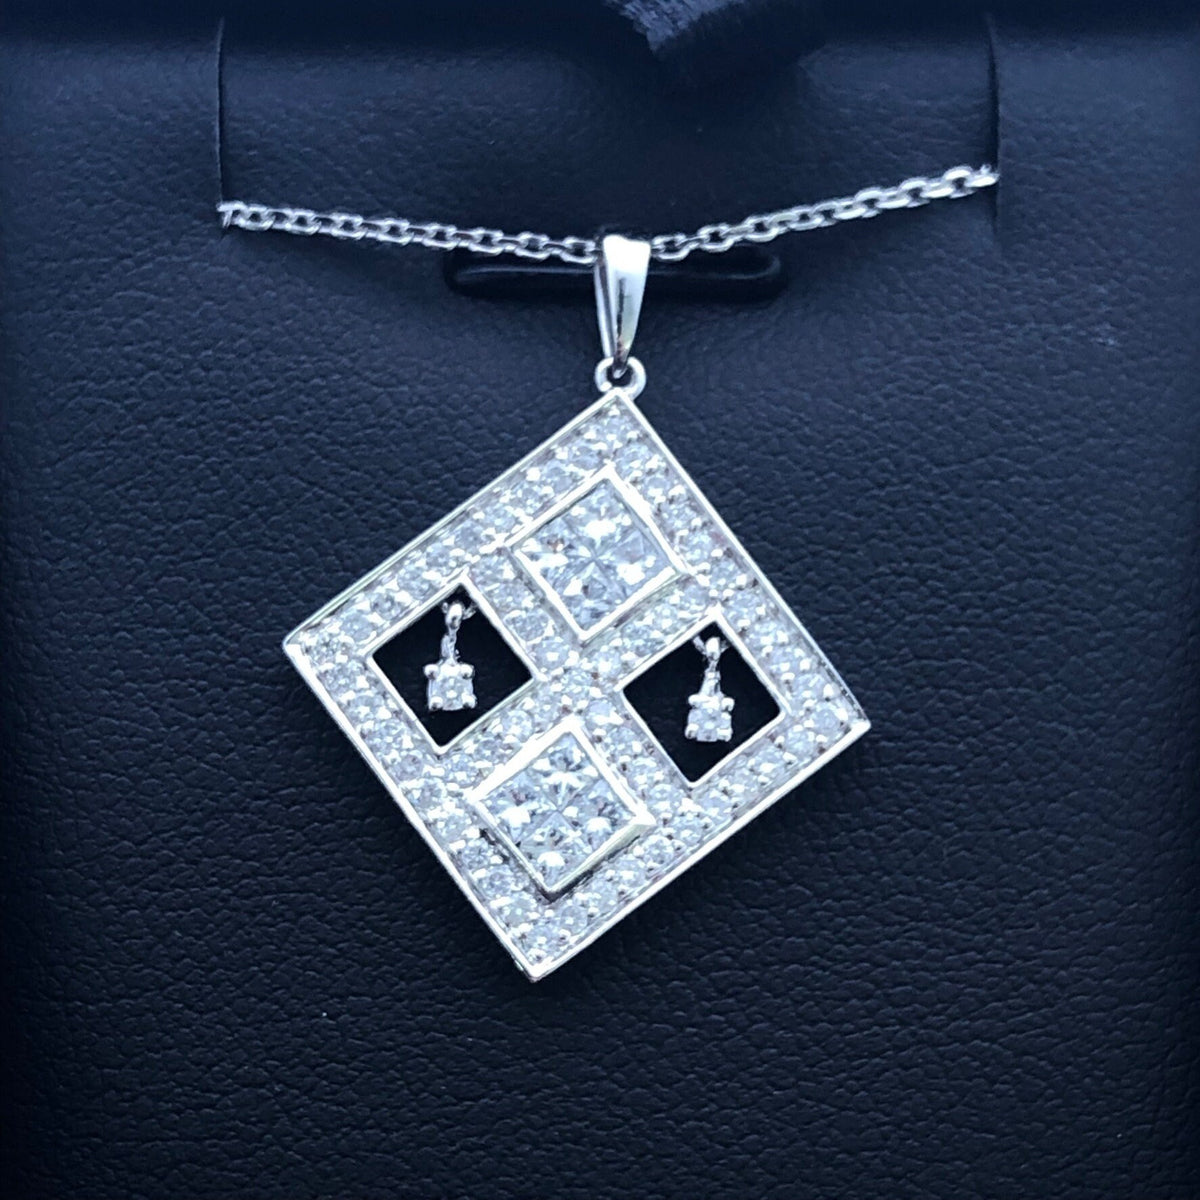 LIV 14k White Gold & Diamonds Round Princess Cut Design Large Halo Pendant Necklace